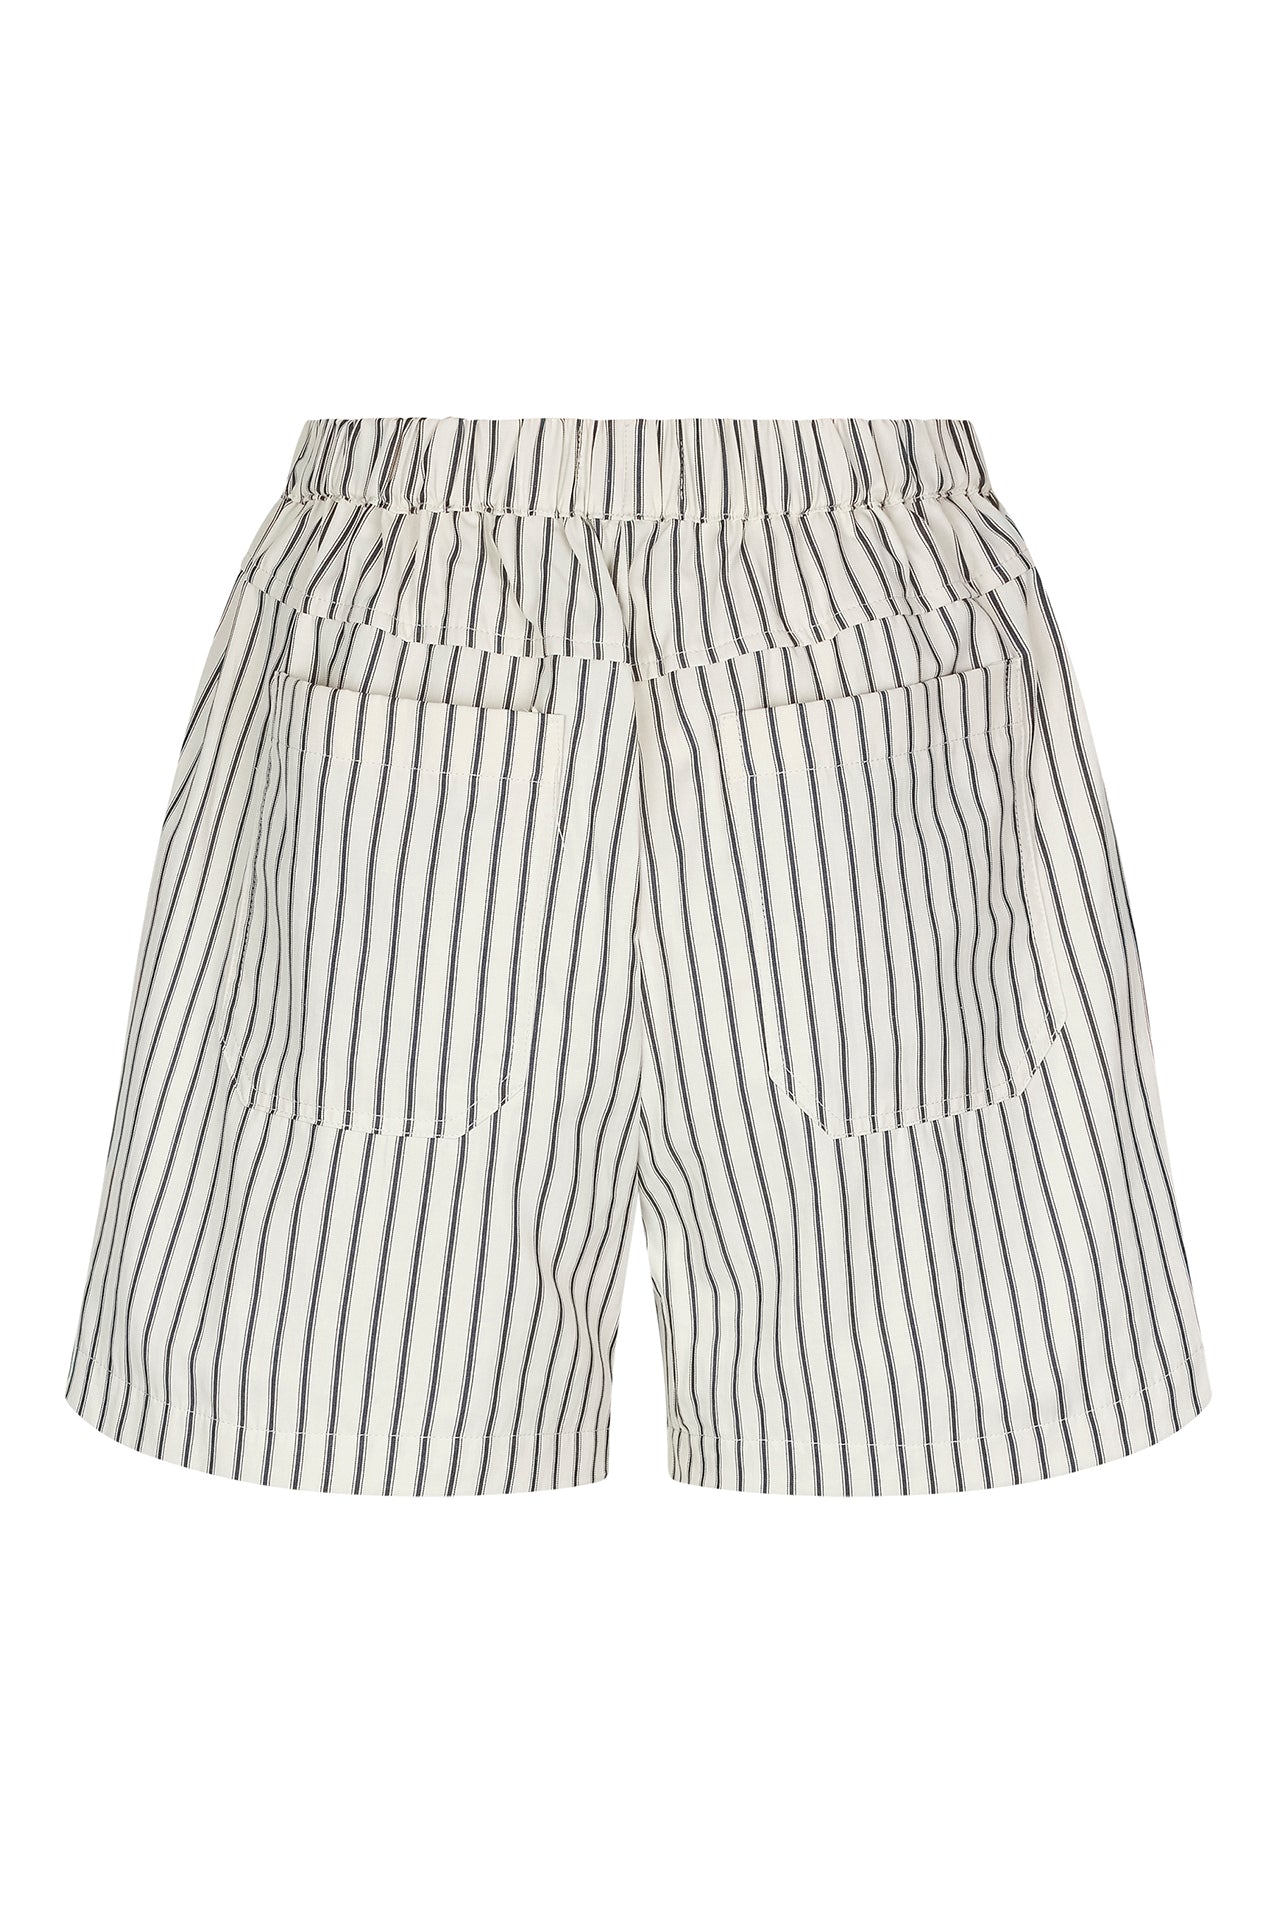 Lollys Laundry AstaLL Shorts Pants 80 Stripe